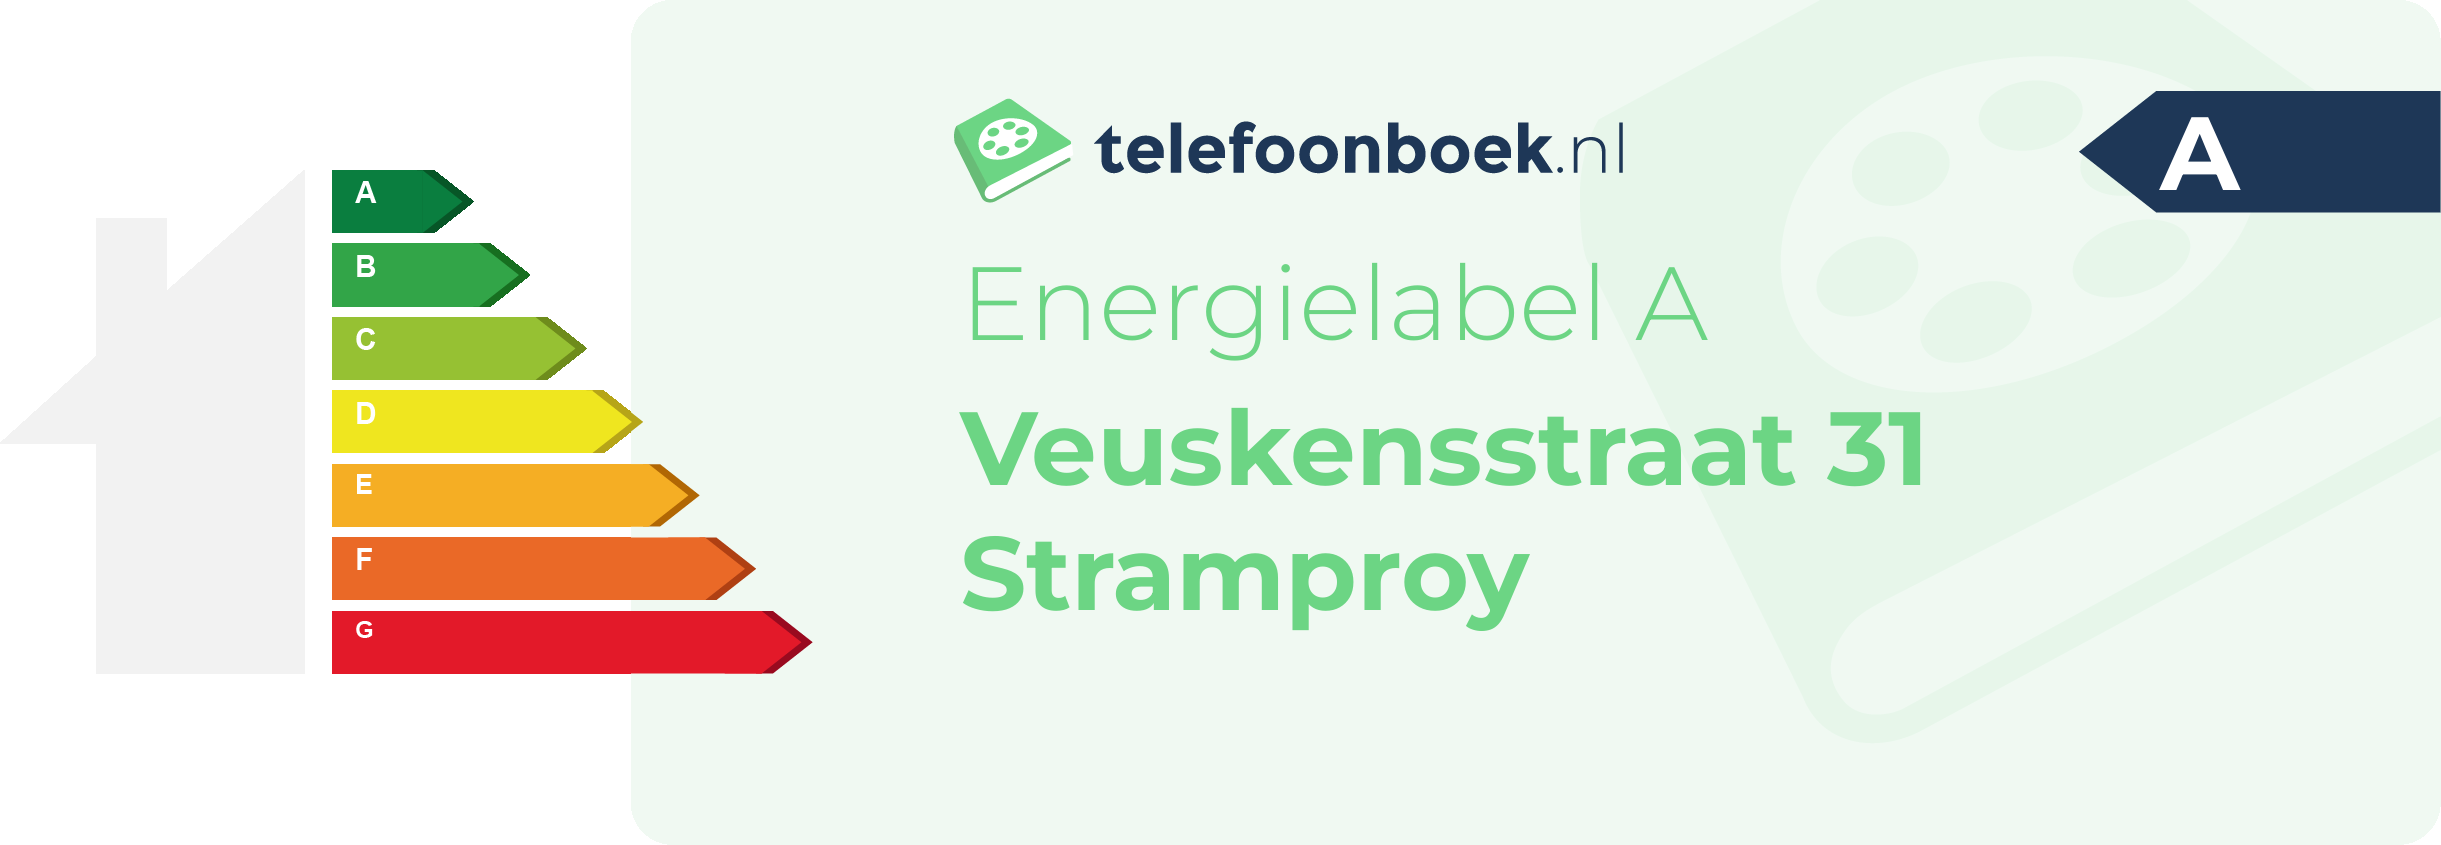 Energielabel Veuskensstraat 31 Stramproy